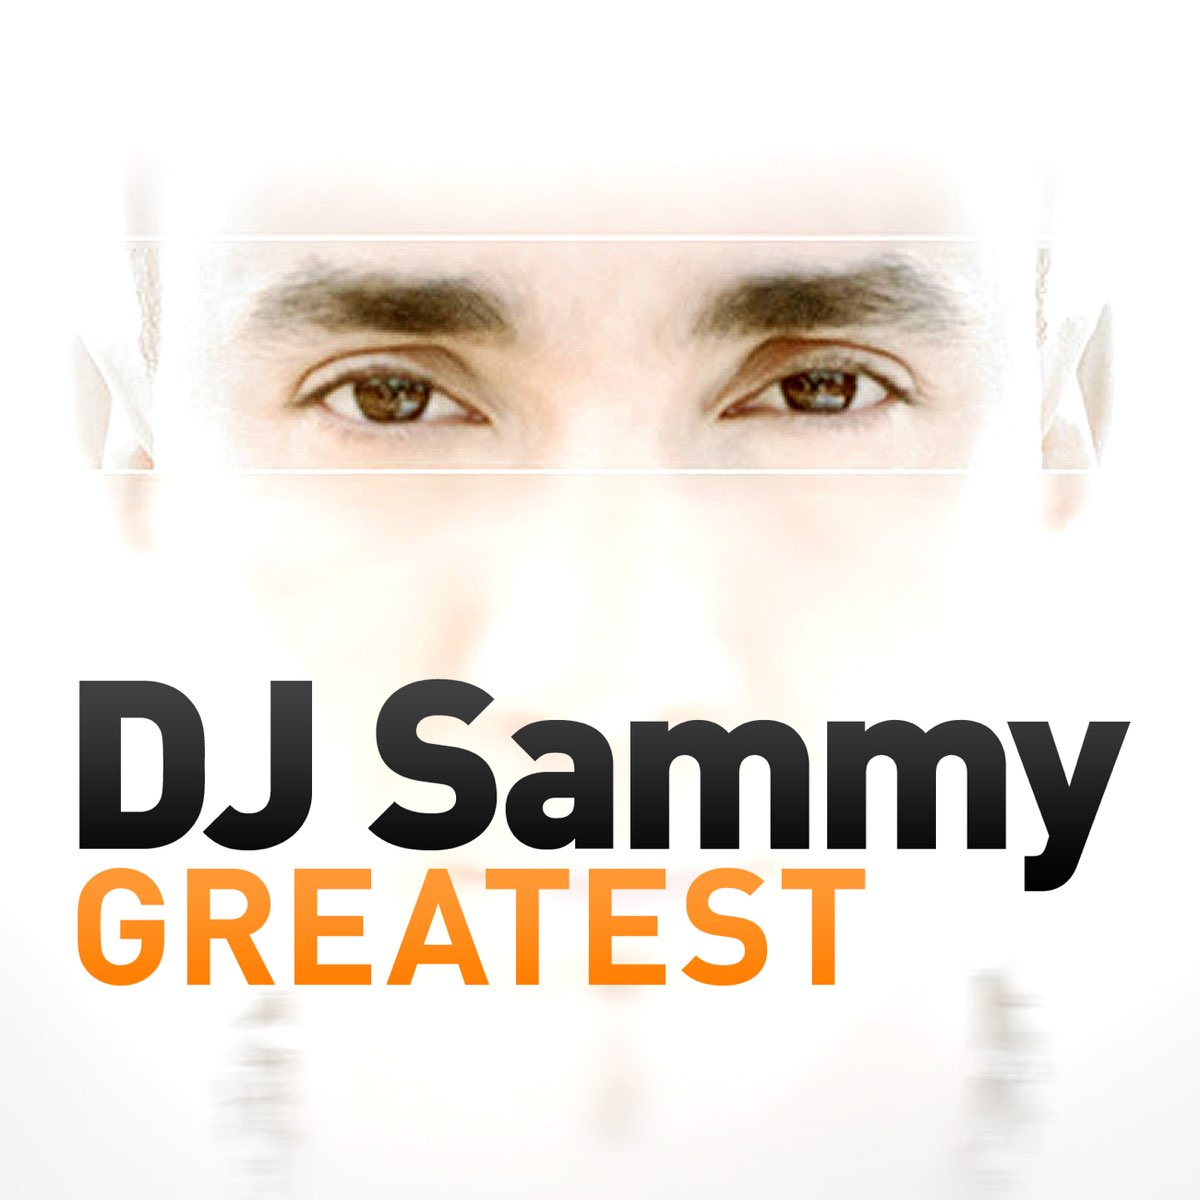 Greatest - DJ Sammy by DJ Sammy on Apple Music